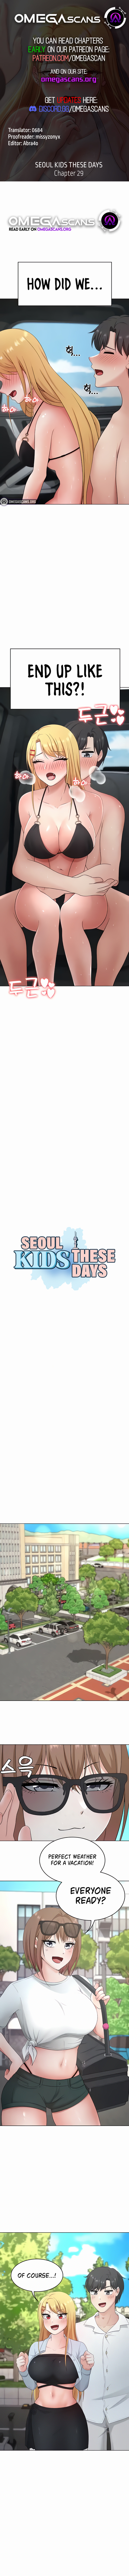 Seoul Kids these Days NEW image